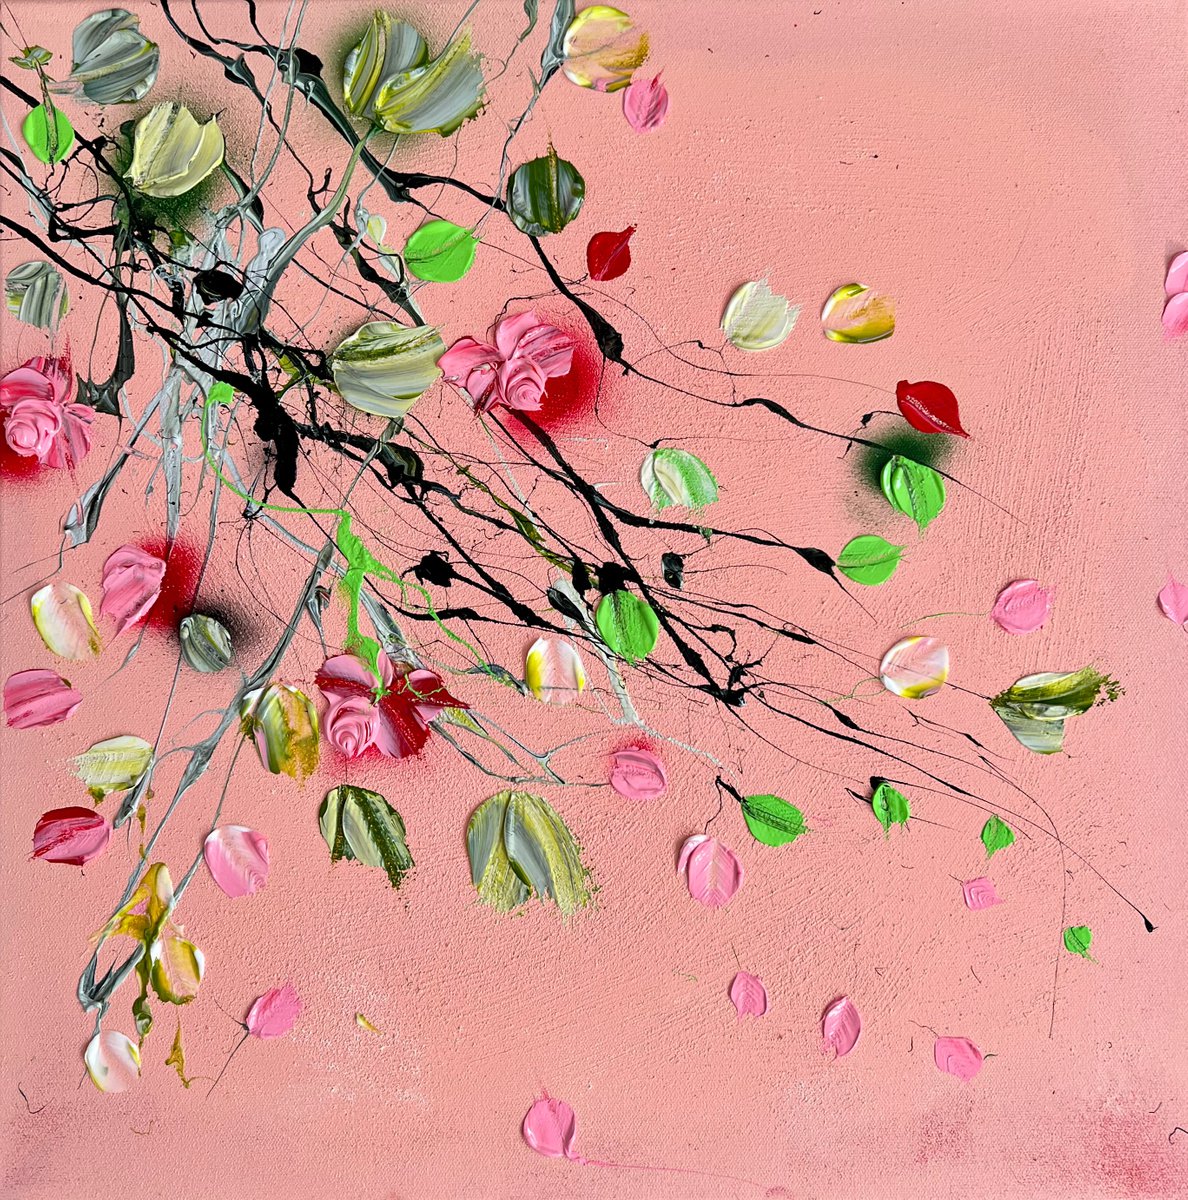 Rose Day acrylic square artwork 50x50cm by Anastassia Skopp